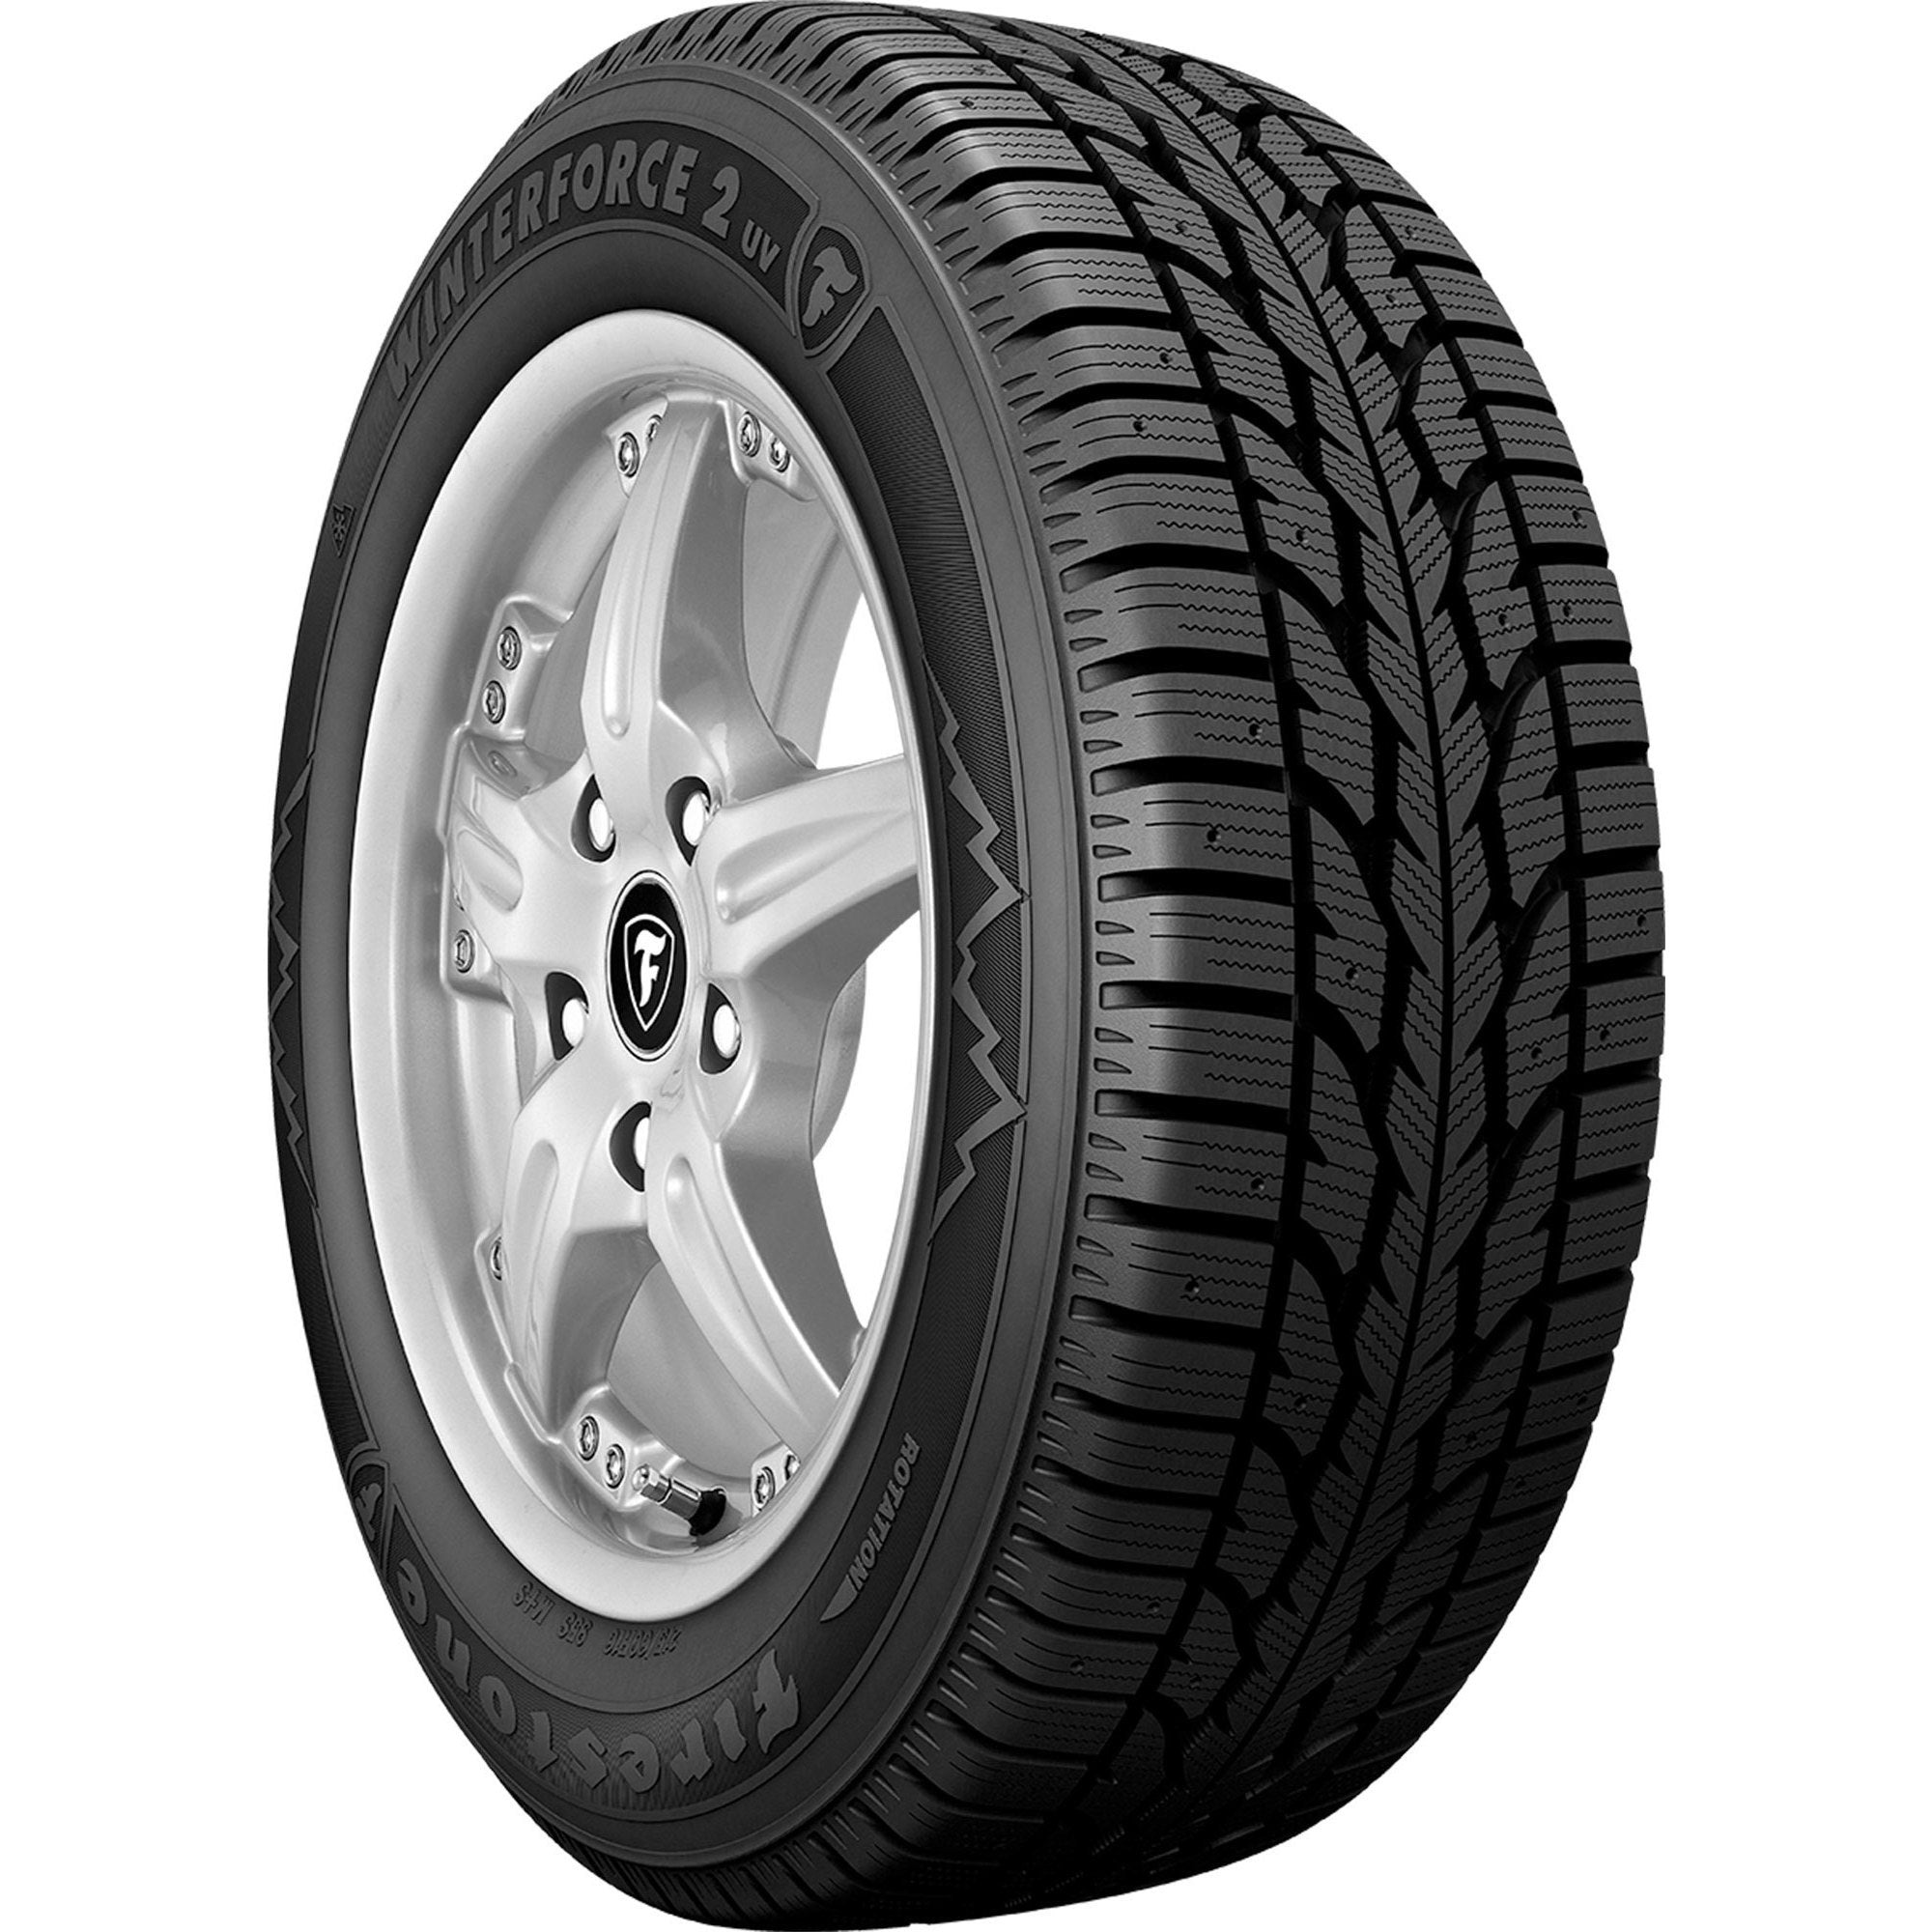 FIRESTONE WINTERFORCE2 UV P225/75R15 (28.3X8.9R 15) Tires